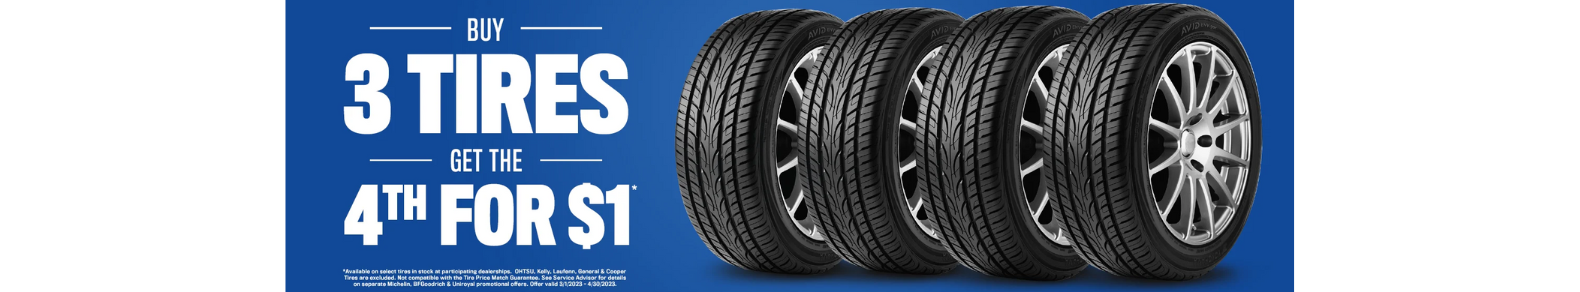 Buy 3 Tires get free tires